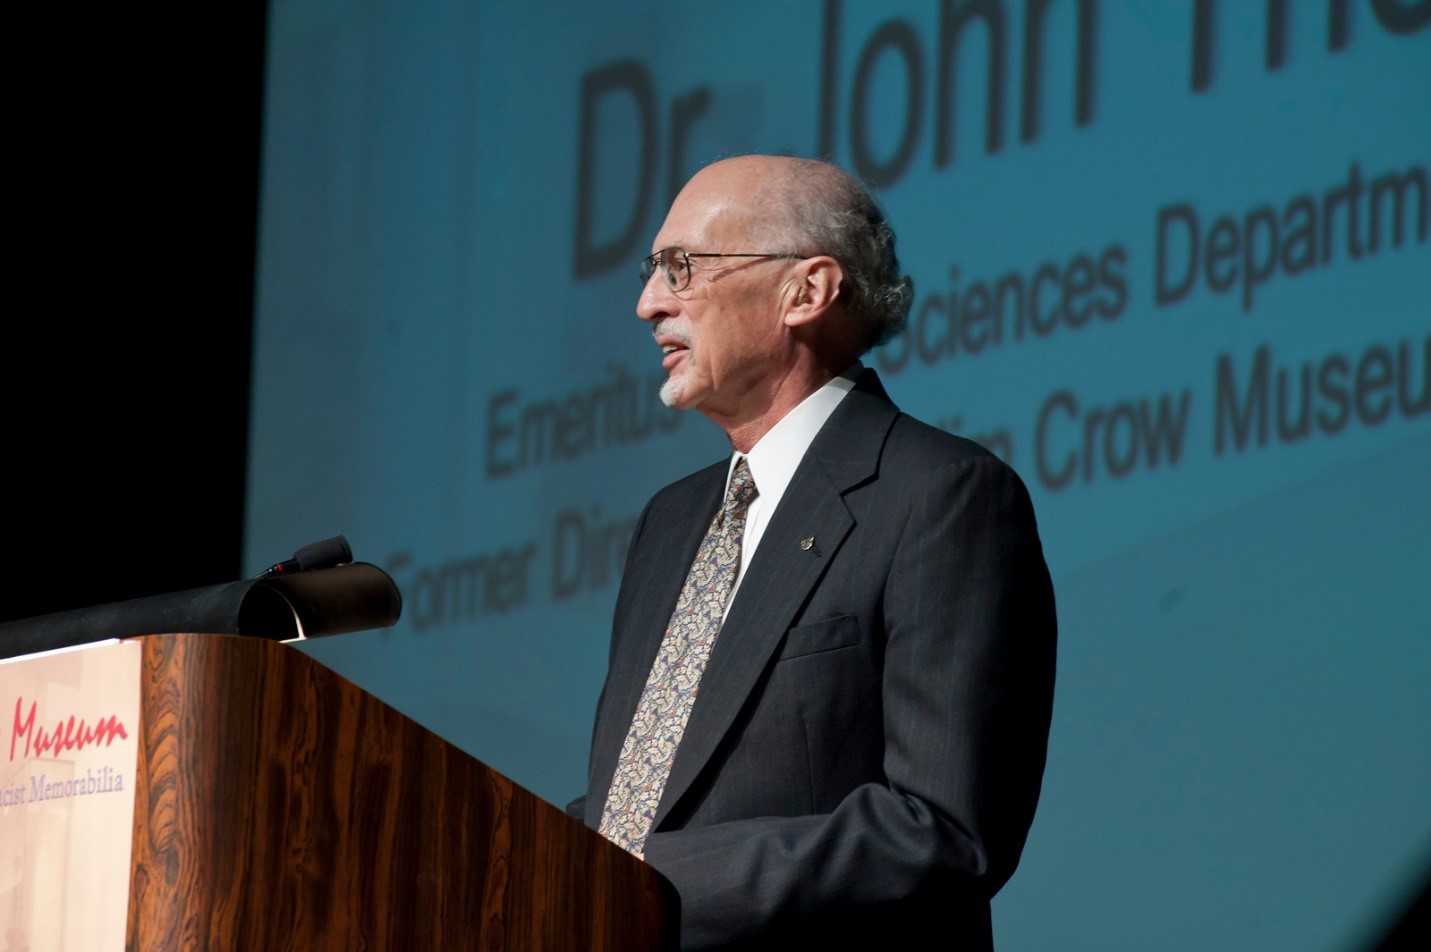 Dr. John Thorp